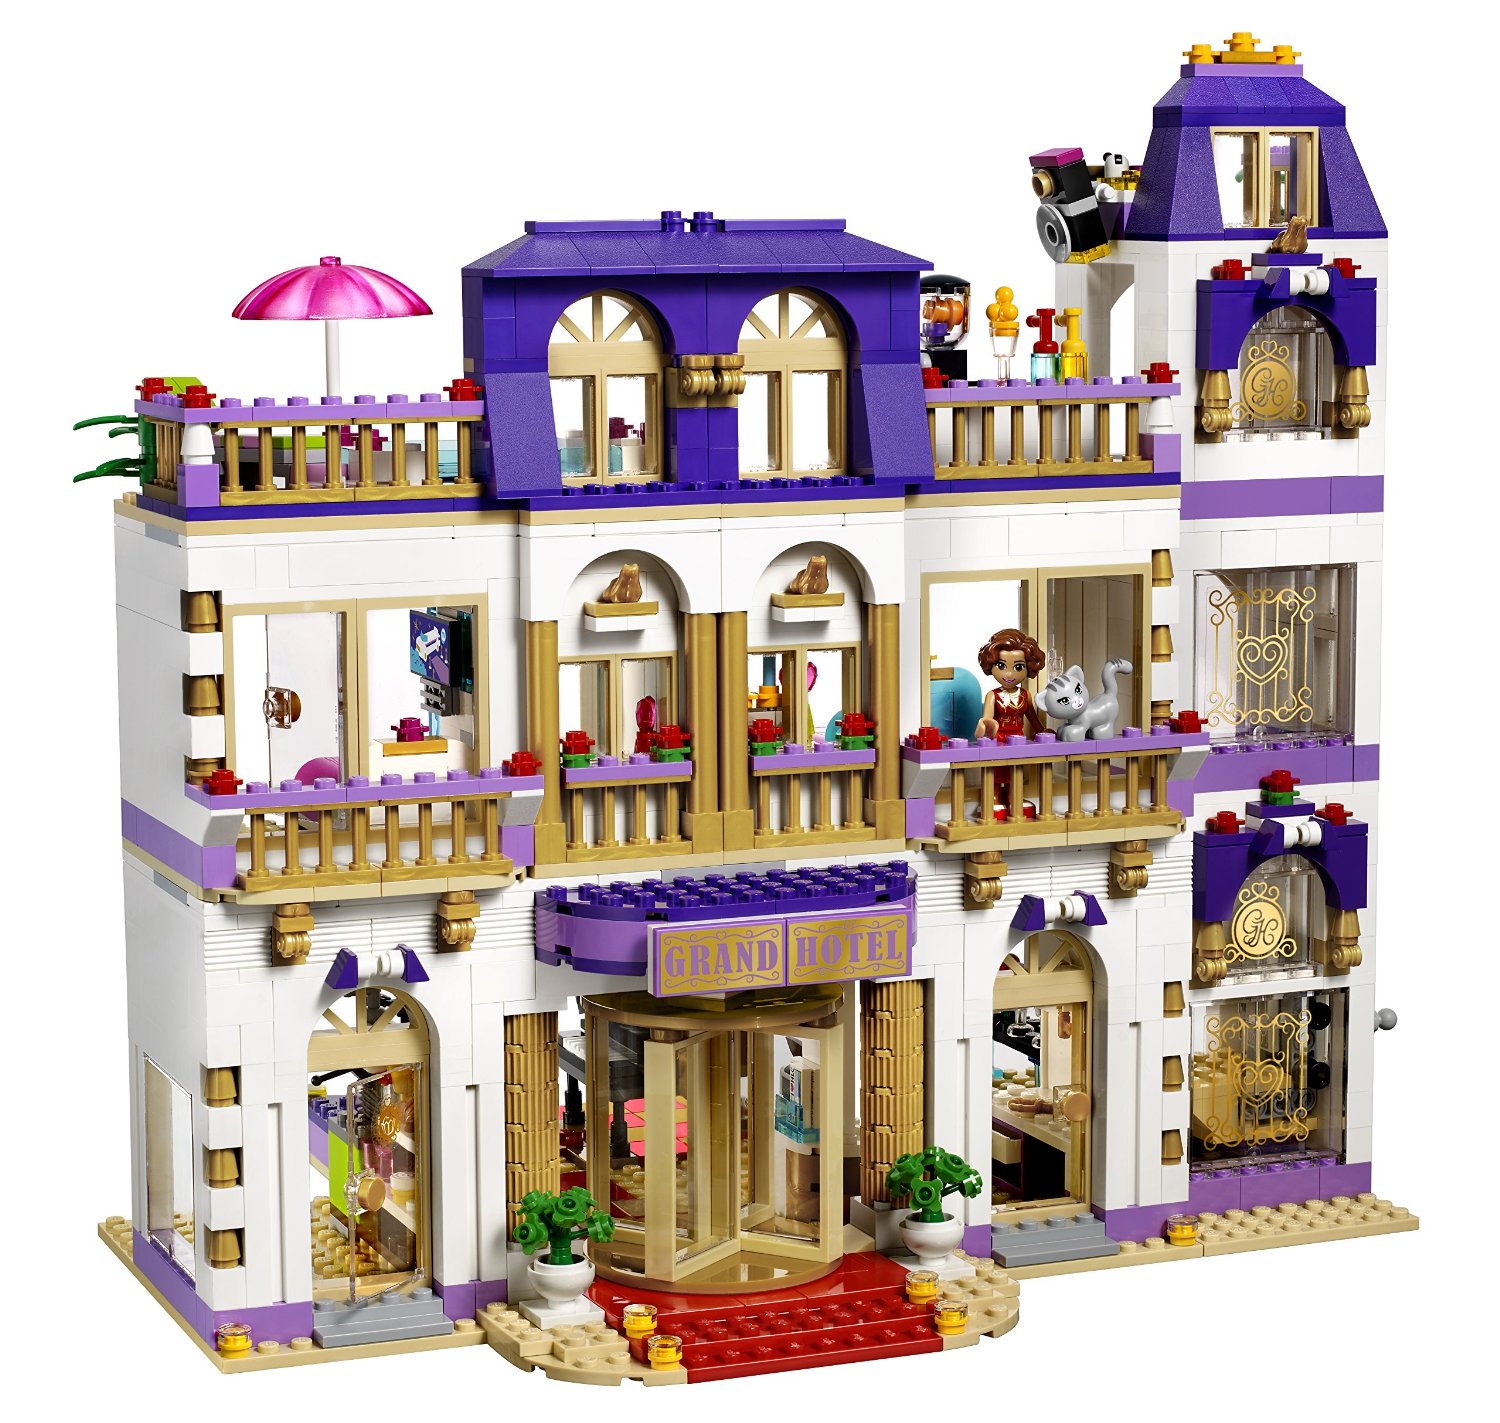 Shopping For LEGO Friends 41101 Heartlake Grand Hotel ...